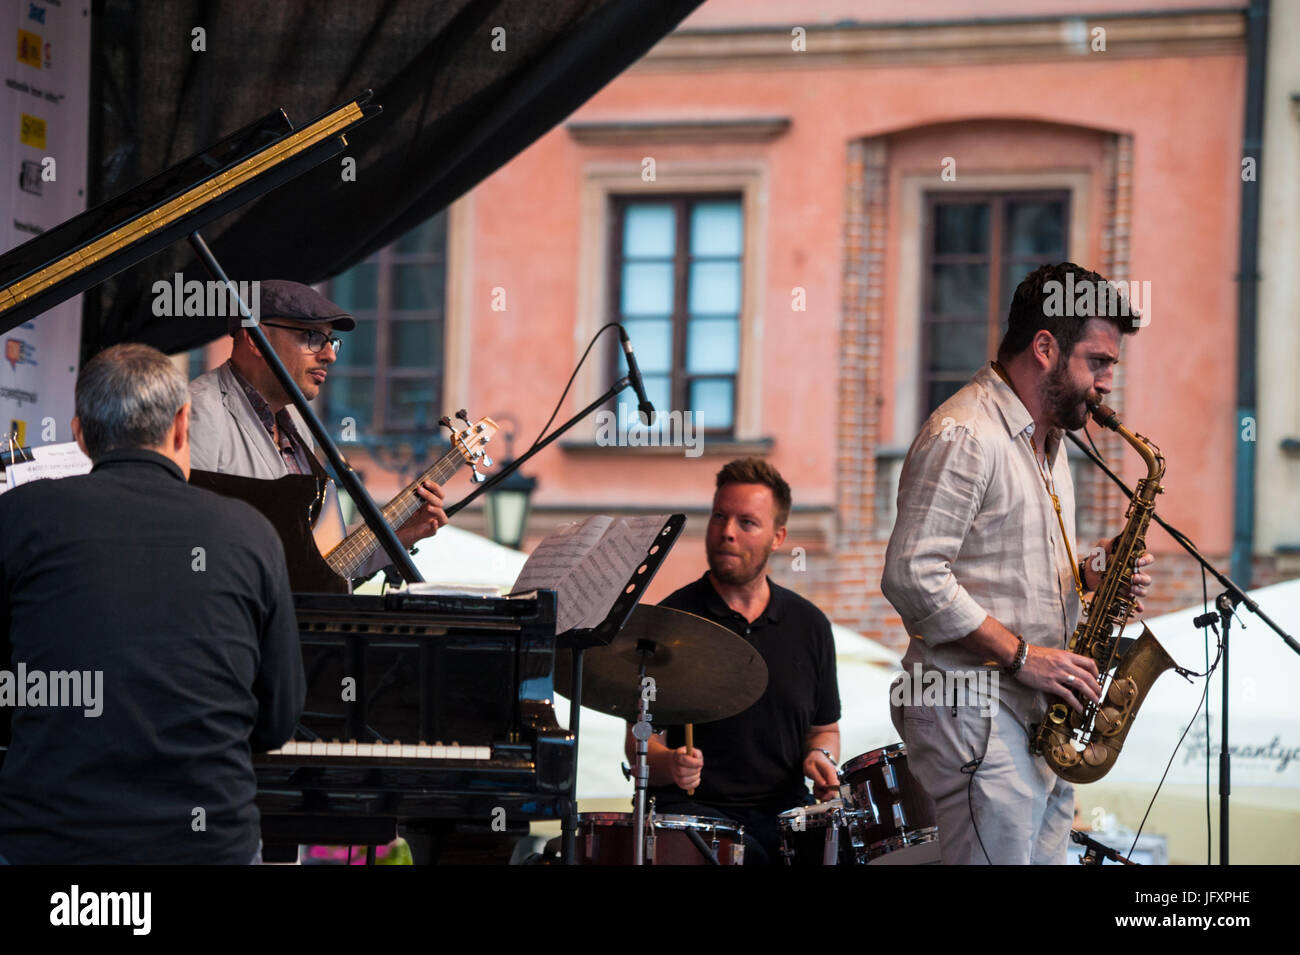 Francesco Cafiso Quartett aus Italien auf dem Altstädter Ring in Warschau, Polen. Stockfoto